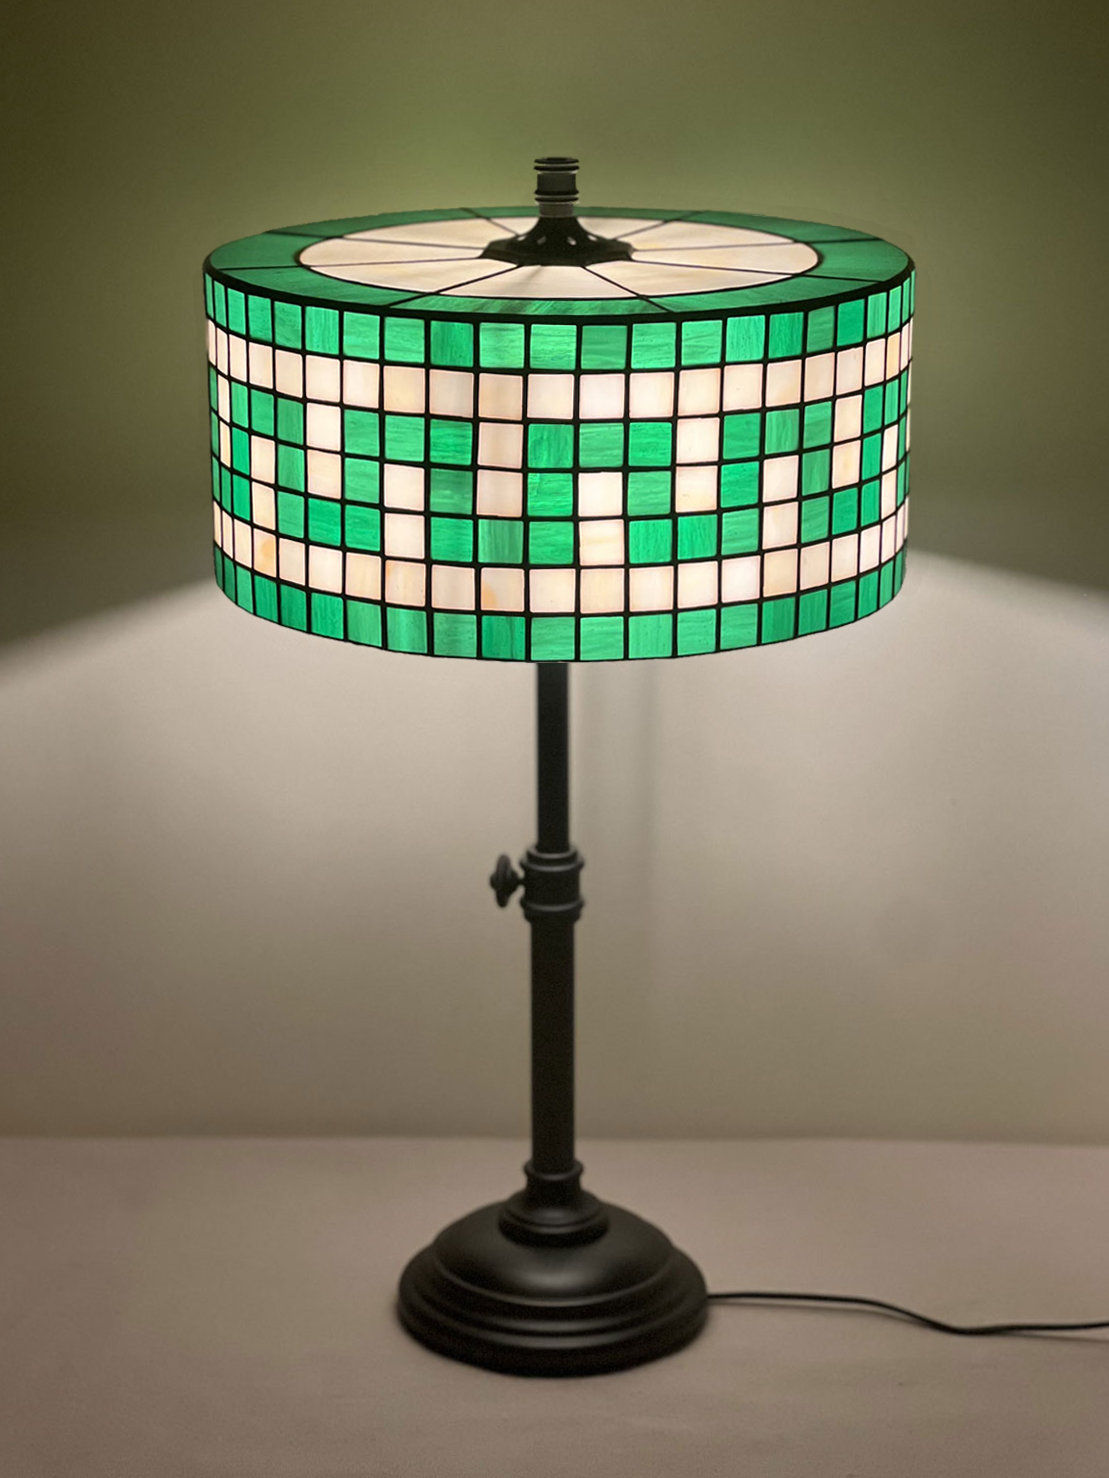 mosaic lamp